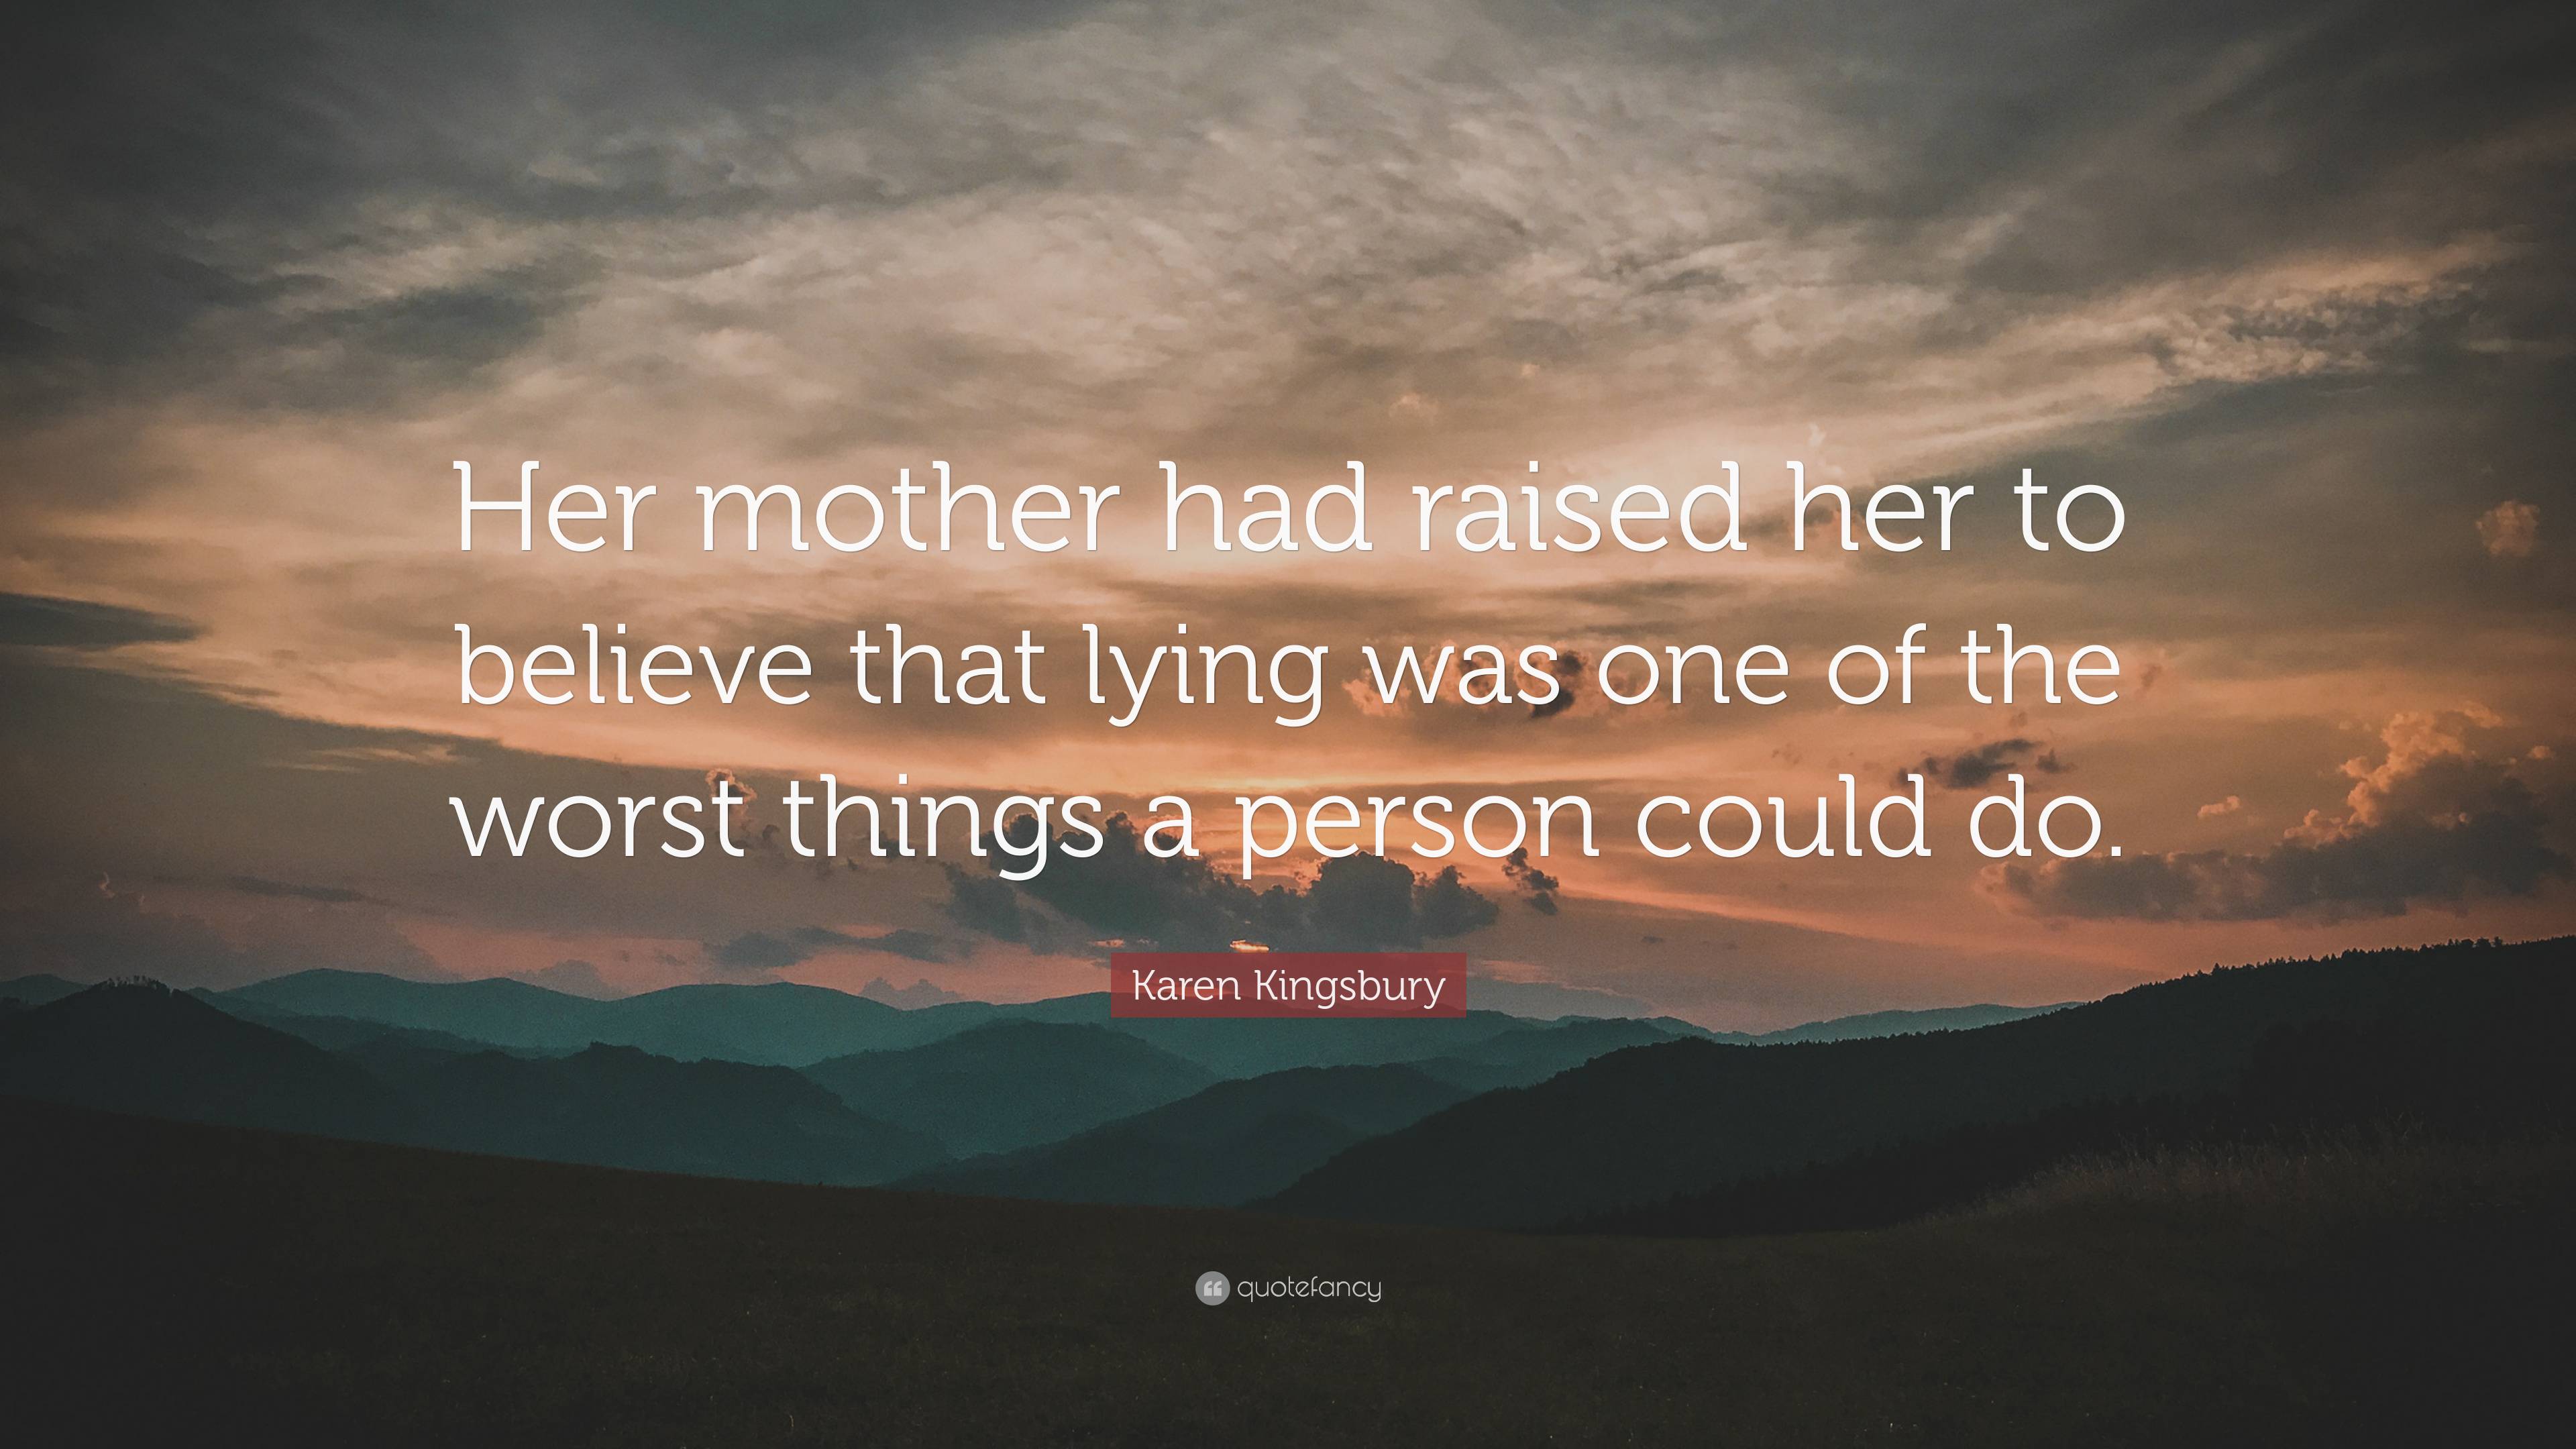 Karen Kingsbury Quote: “Her mother had raised her to believe that lying ...